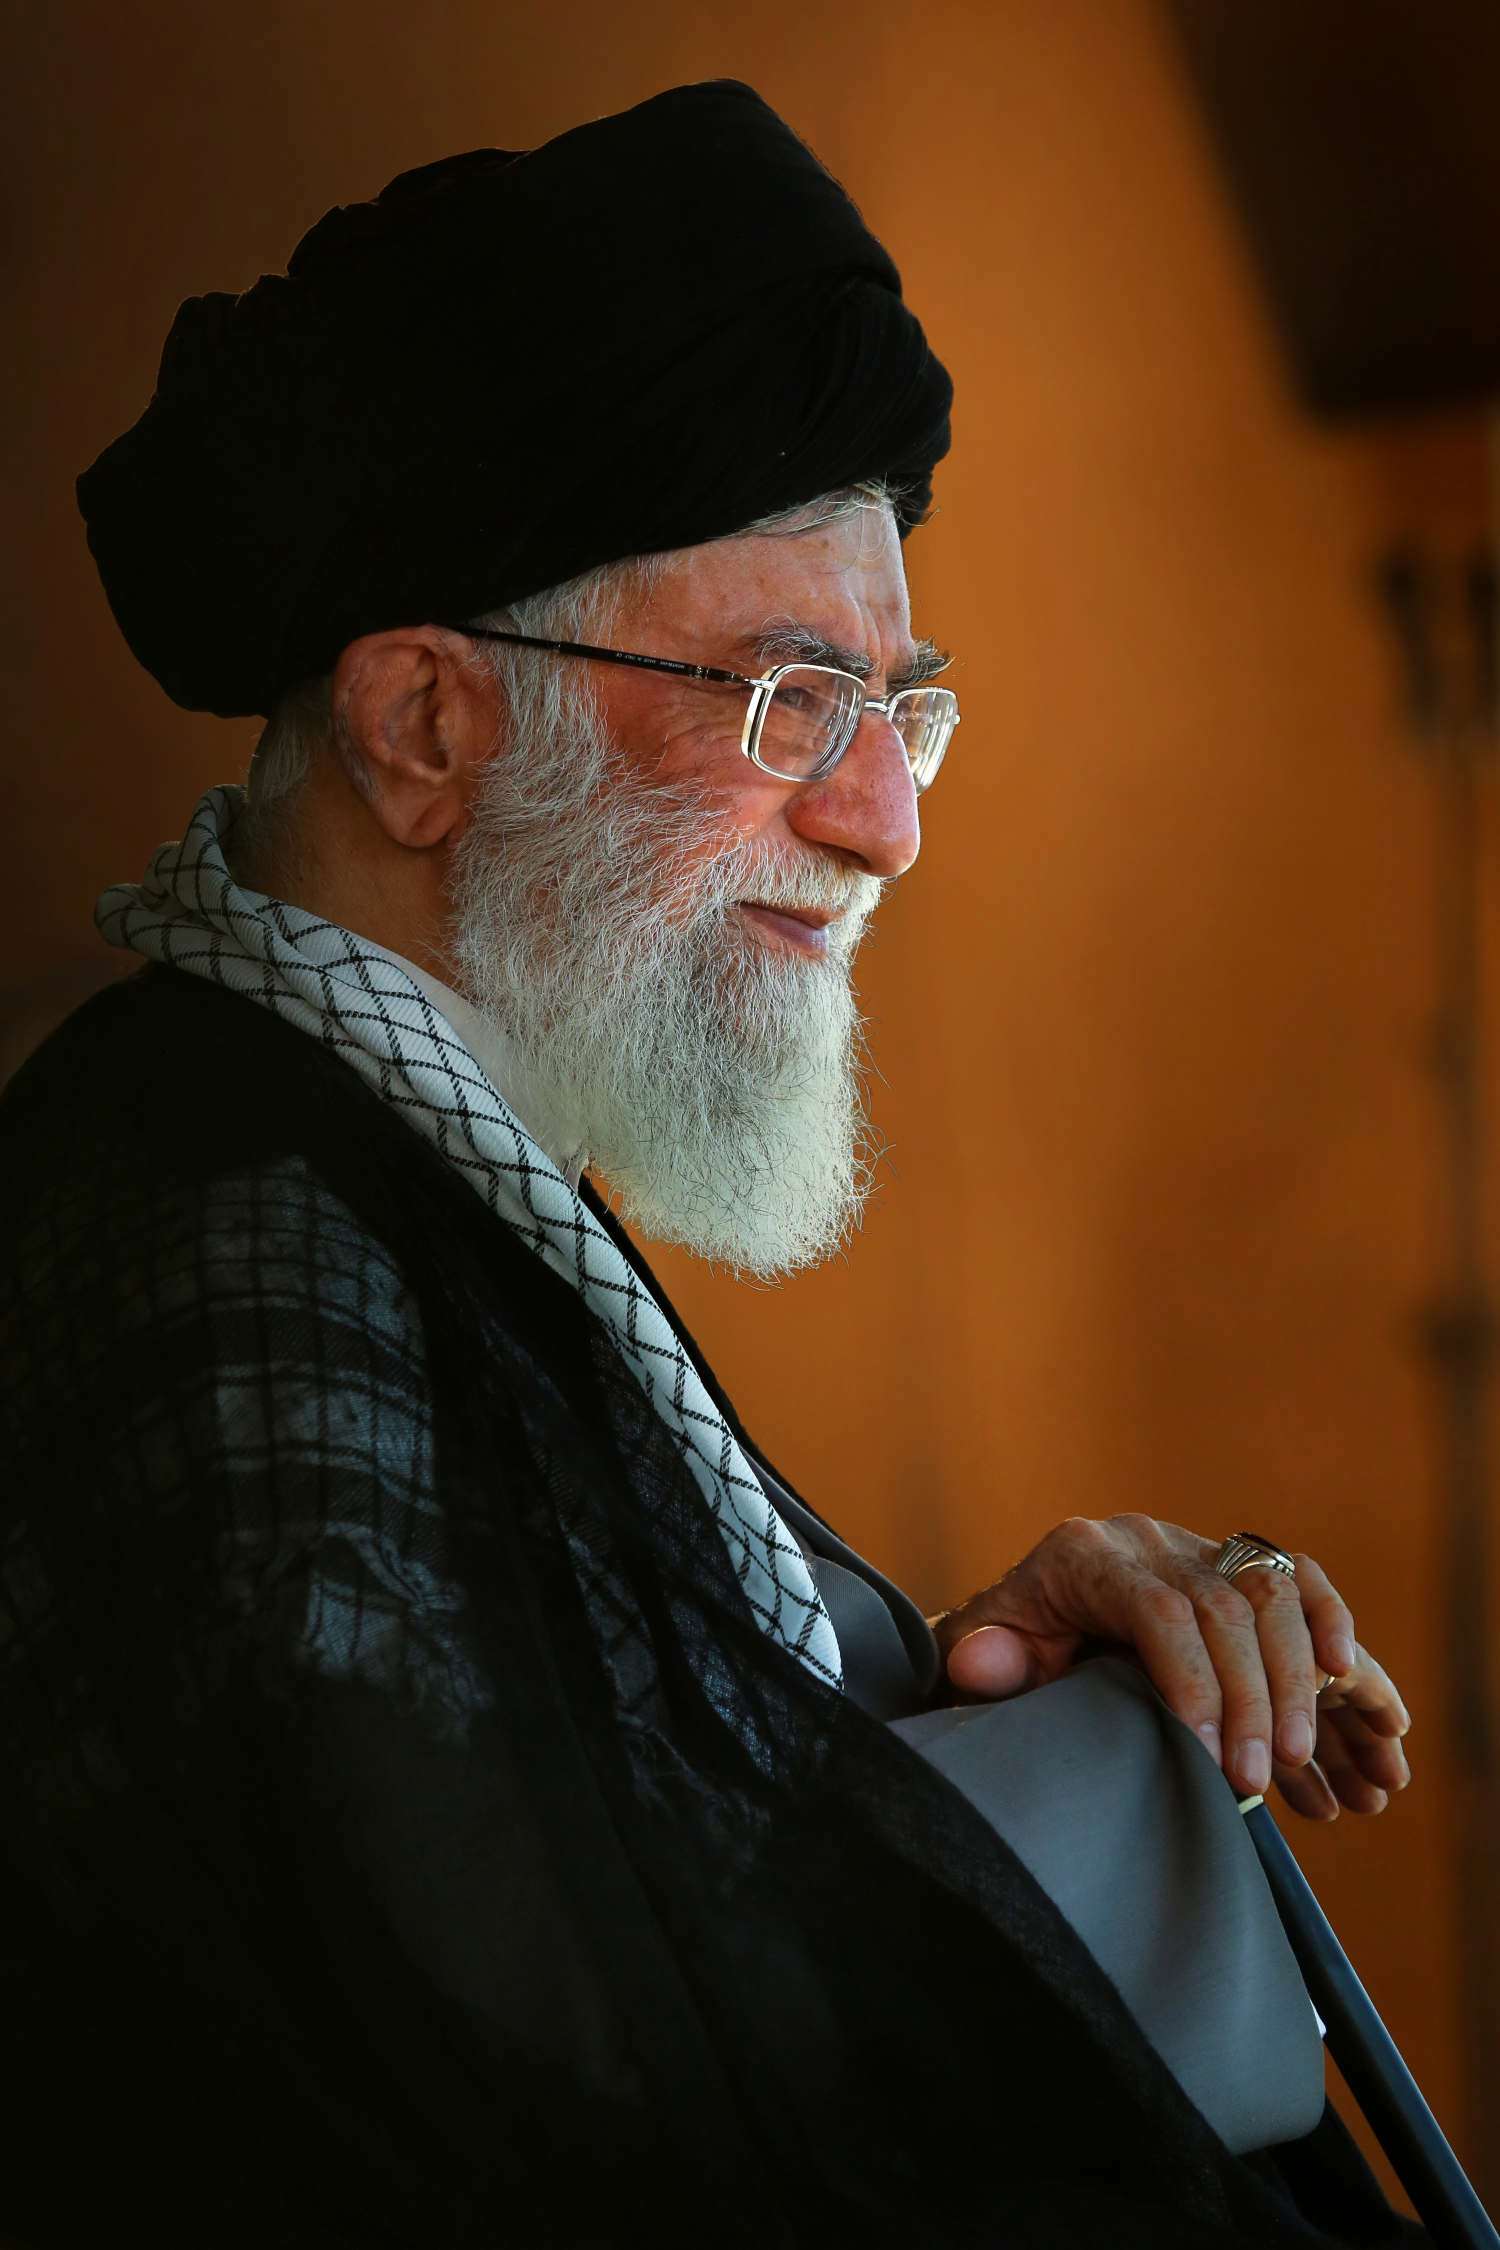 Khamenei hires stock photography and images  Alamy